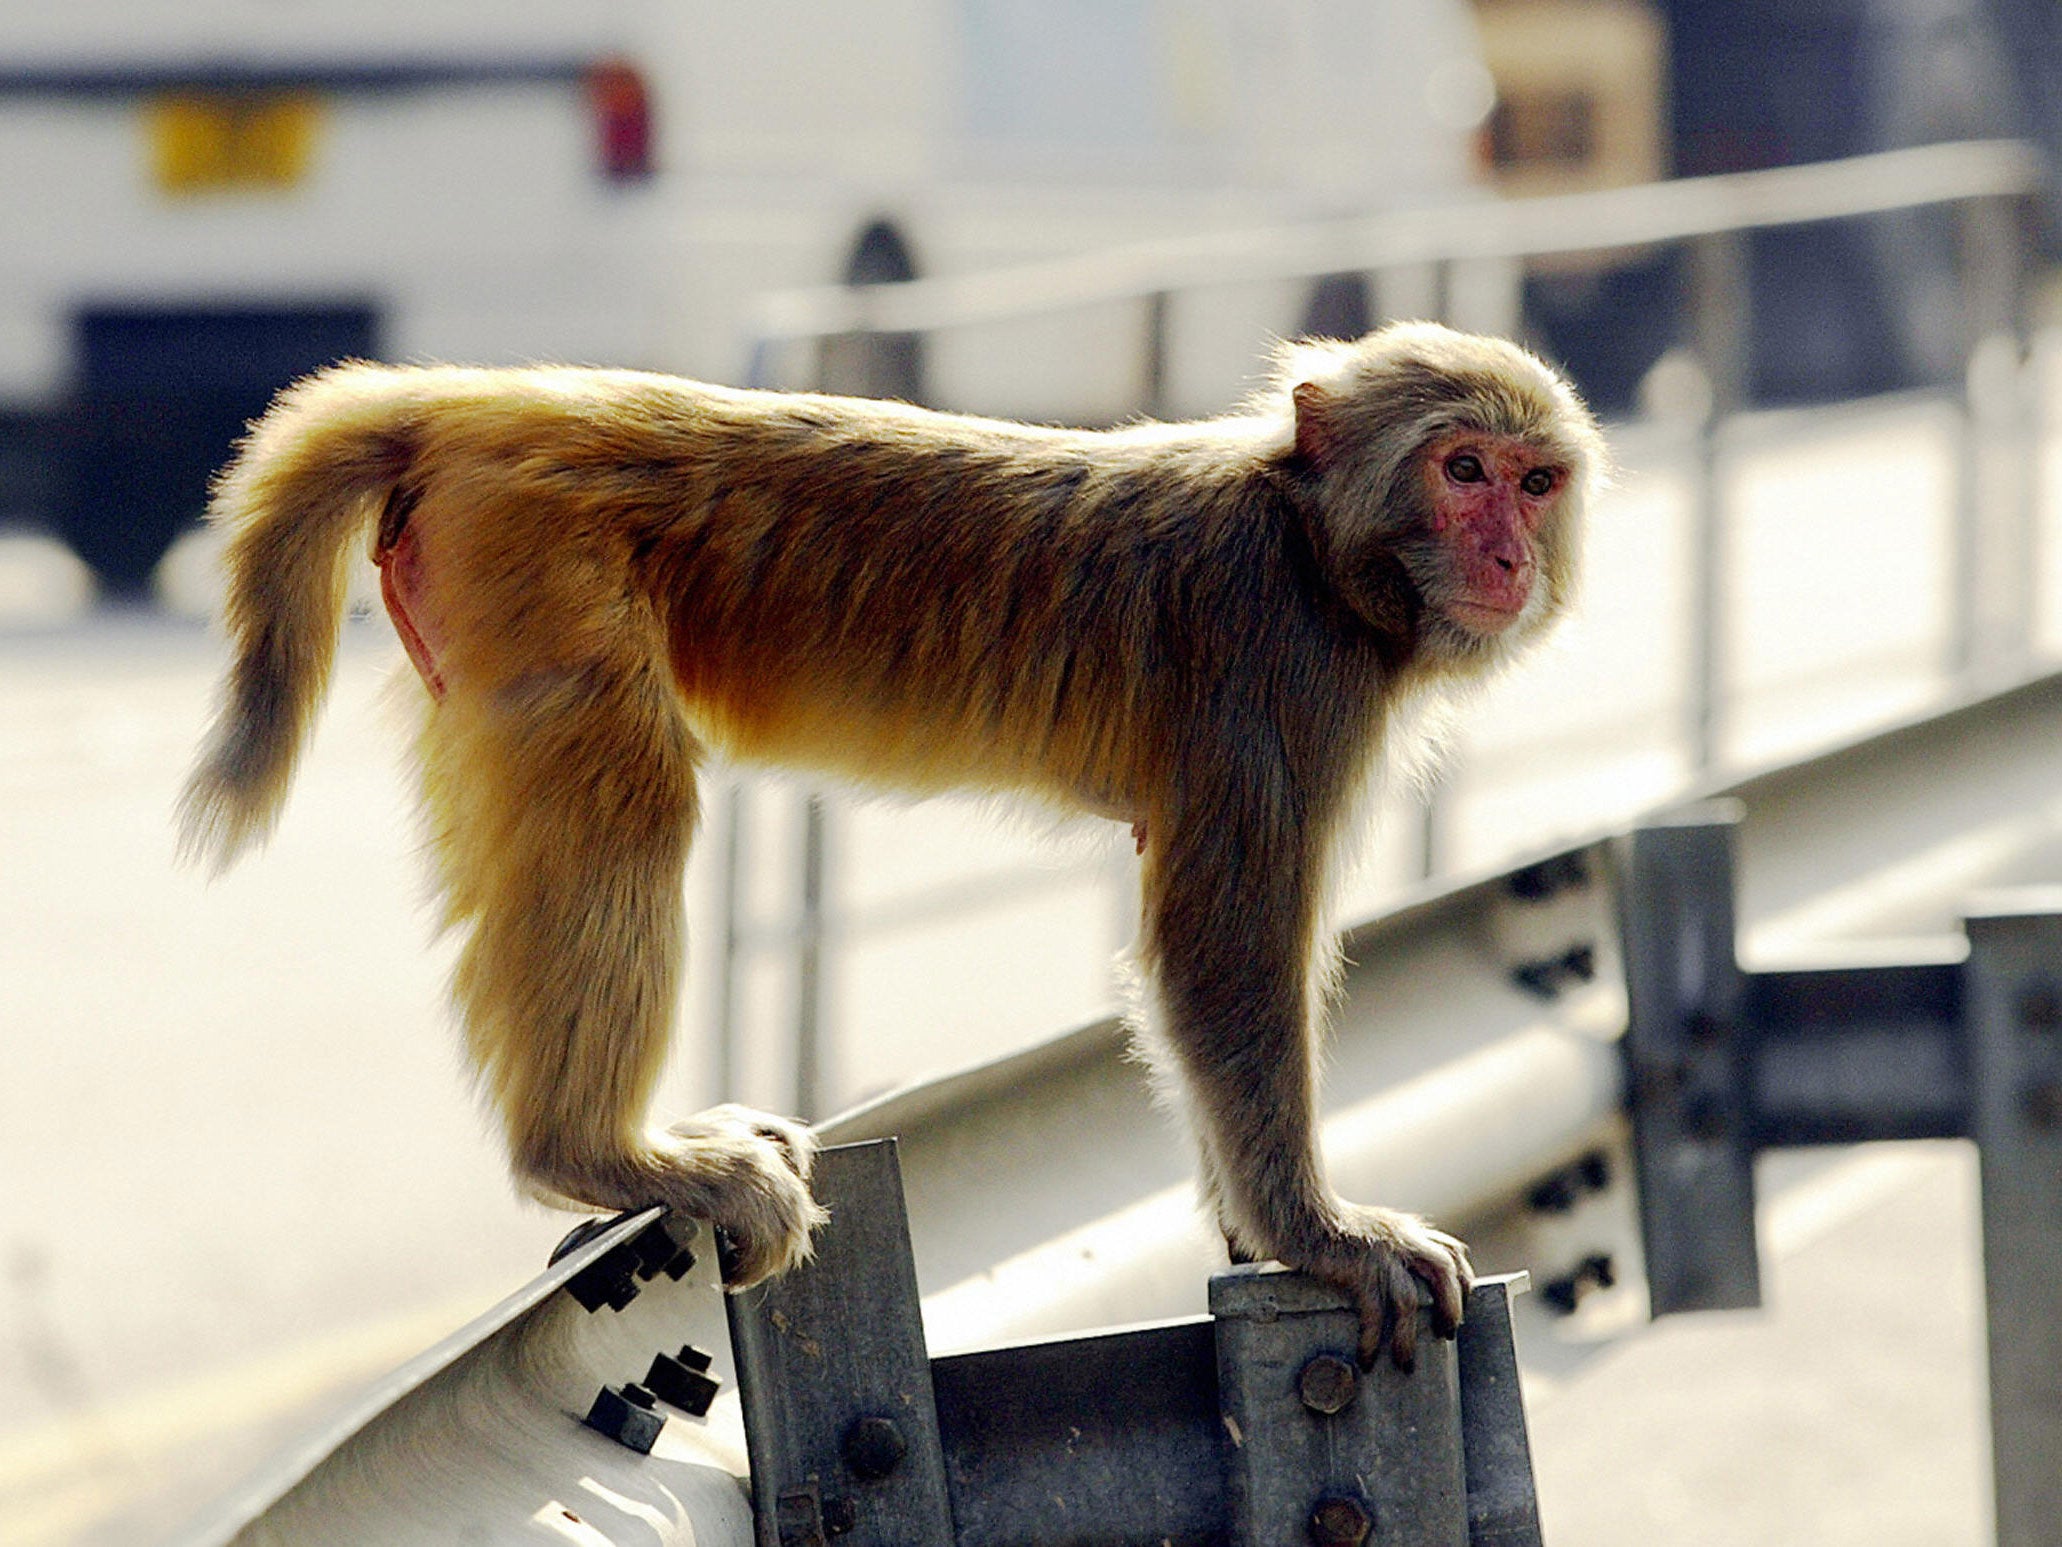 A rhesus macaque in Hong Kong